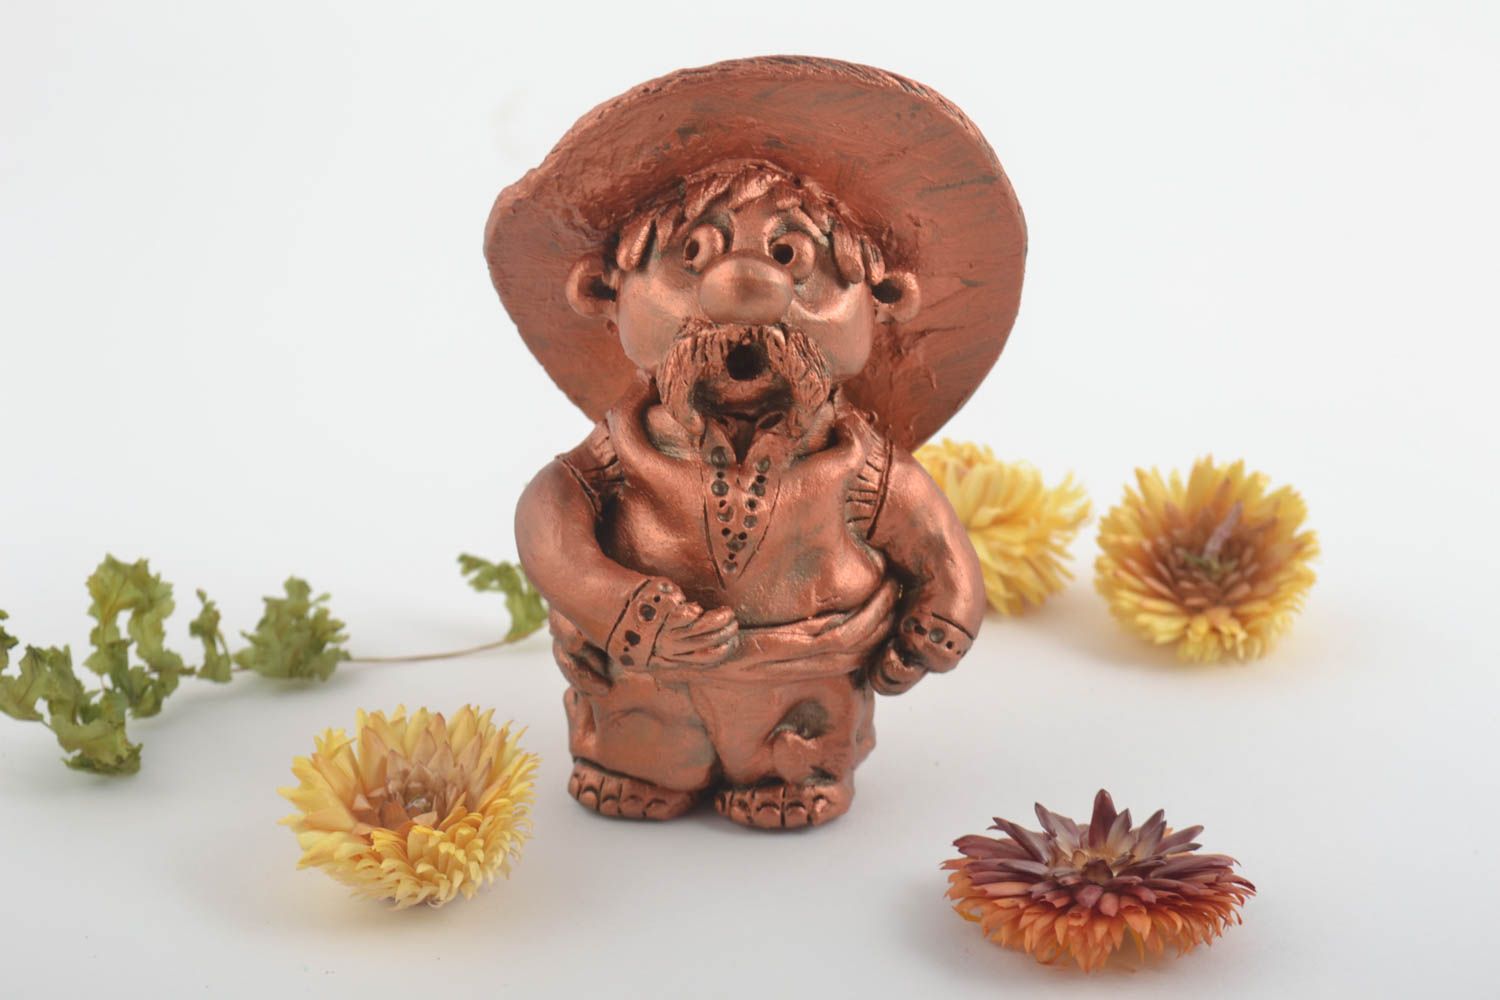 Statuina fatta a mano figurina di un uomo in ceramica souvenir di terracotta
 foto 1